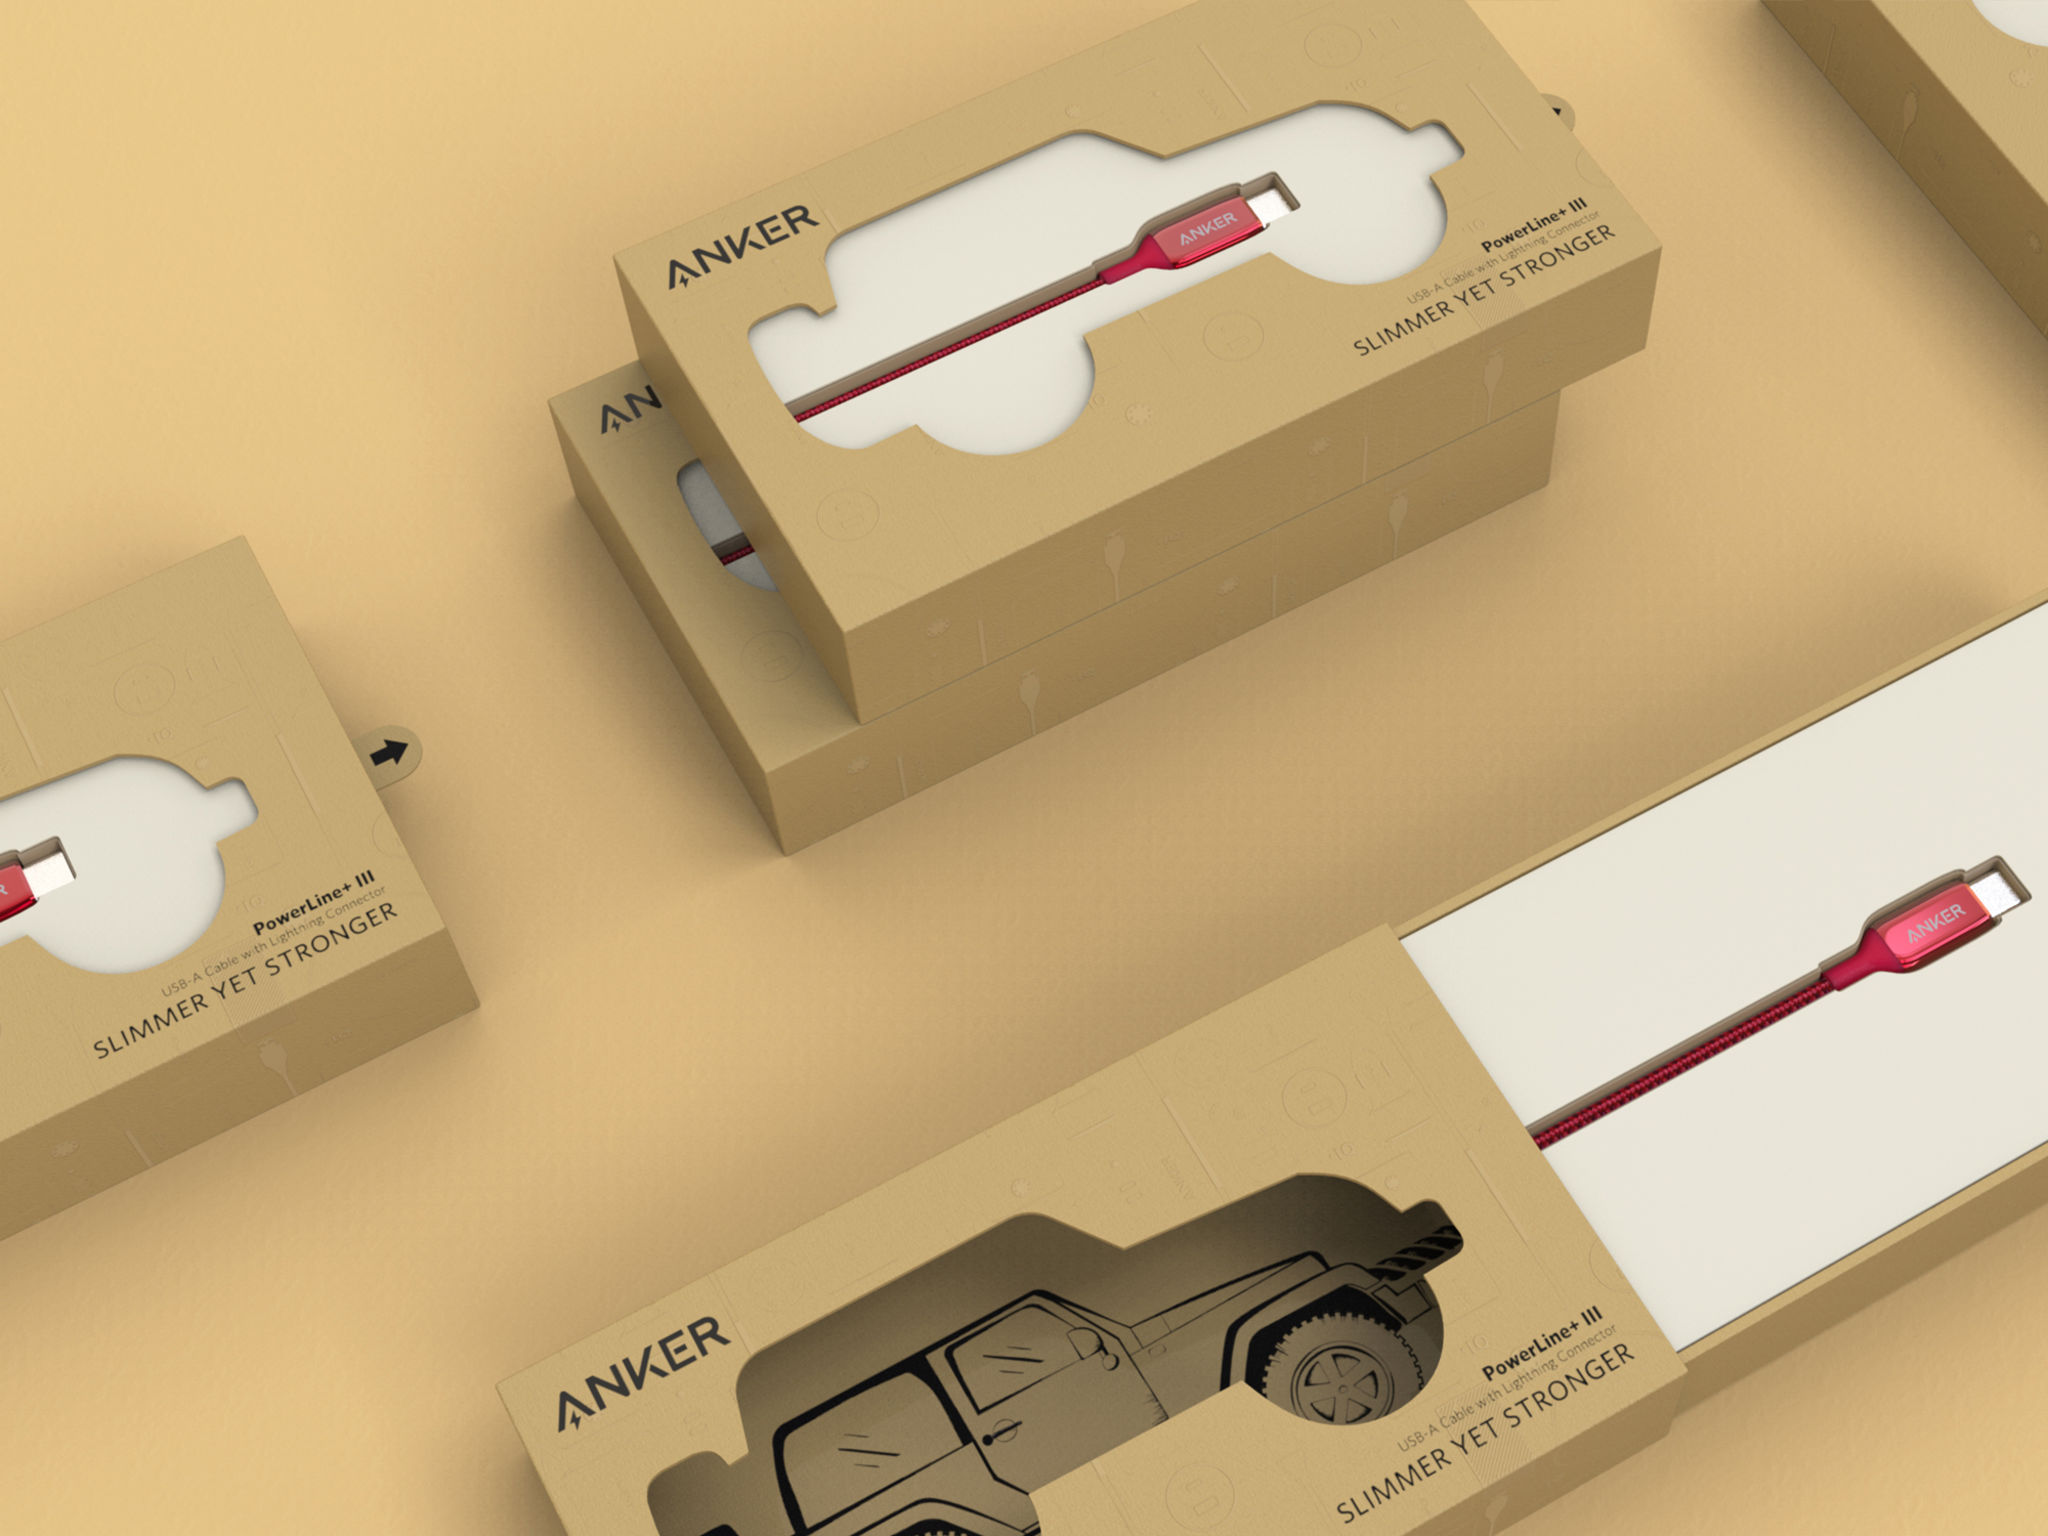 Packaging for Anker PowerLine+ III